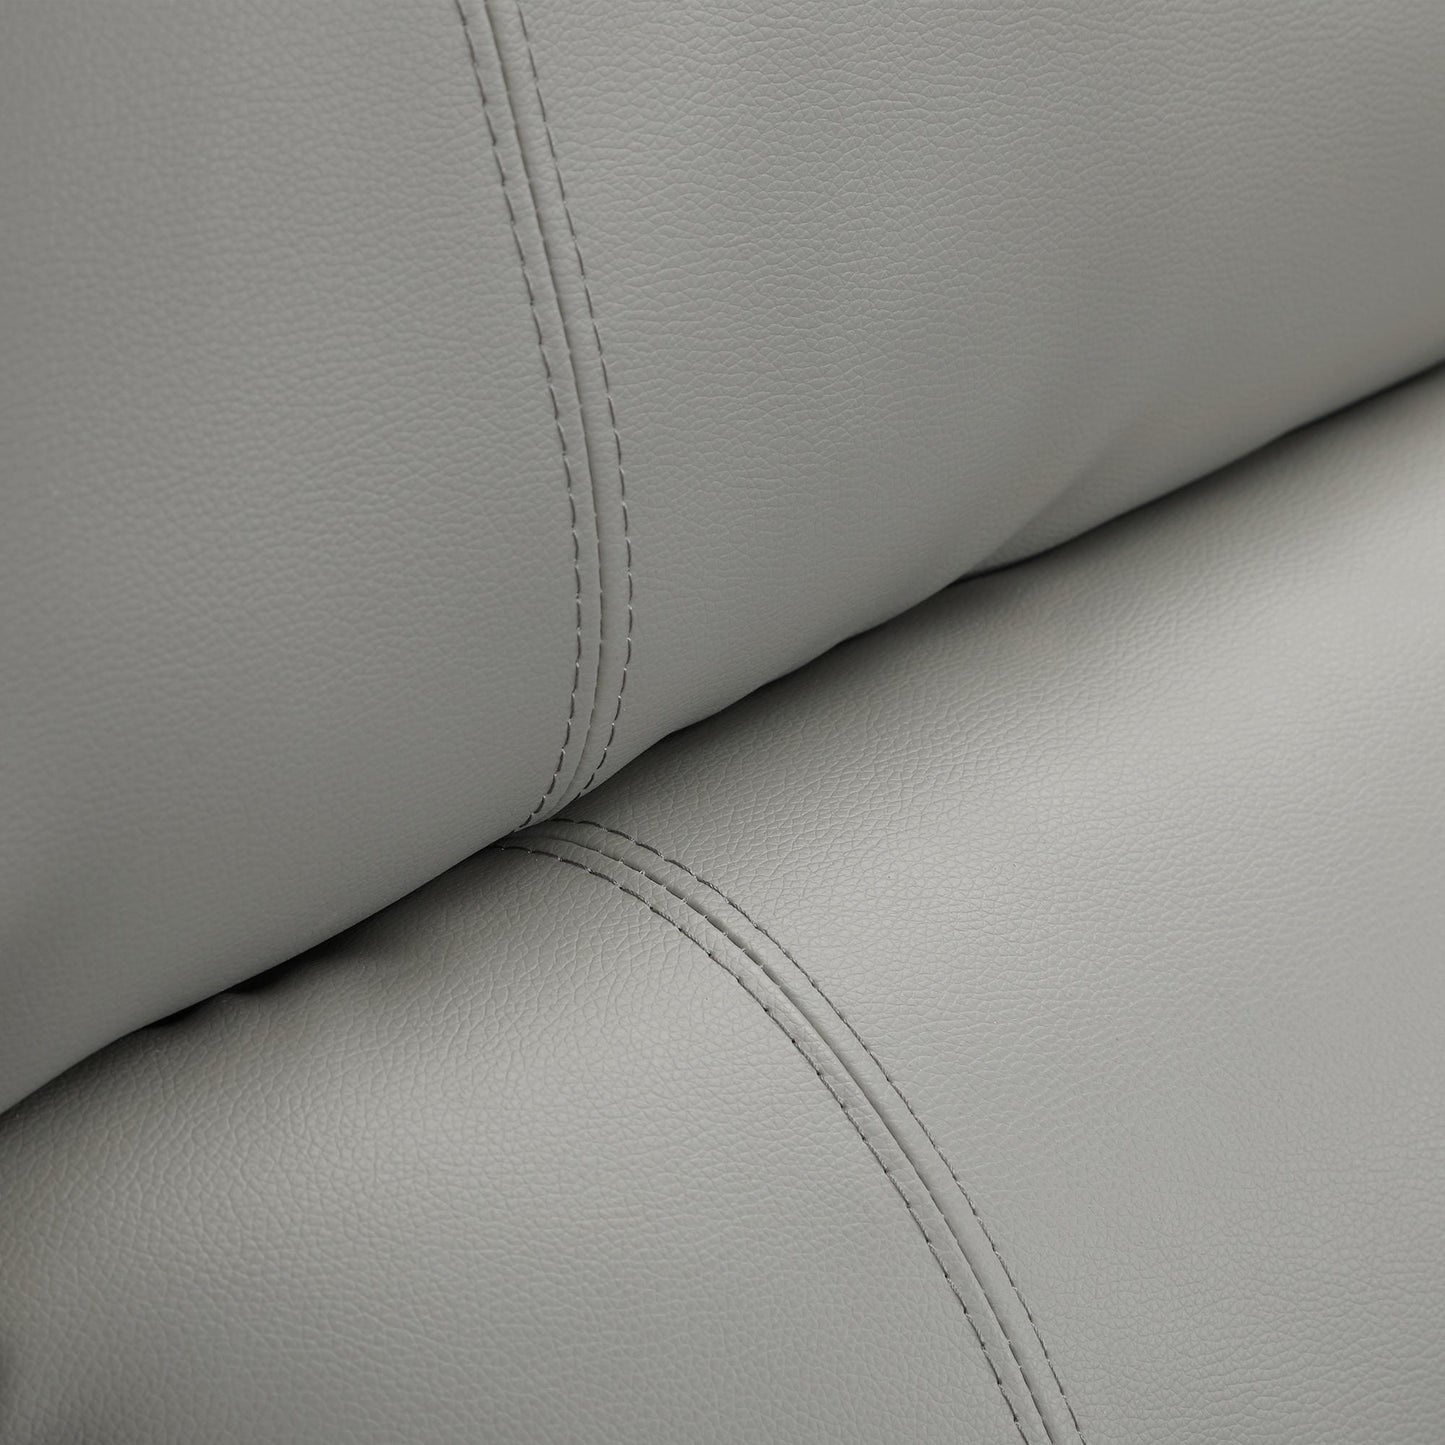 Manual Motion Sofa in PU Leather (Oversized Item / LTL)